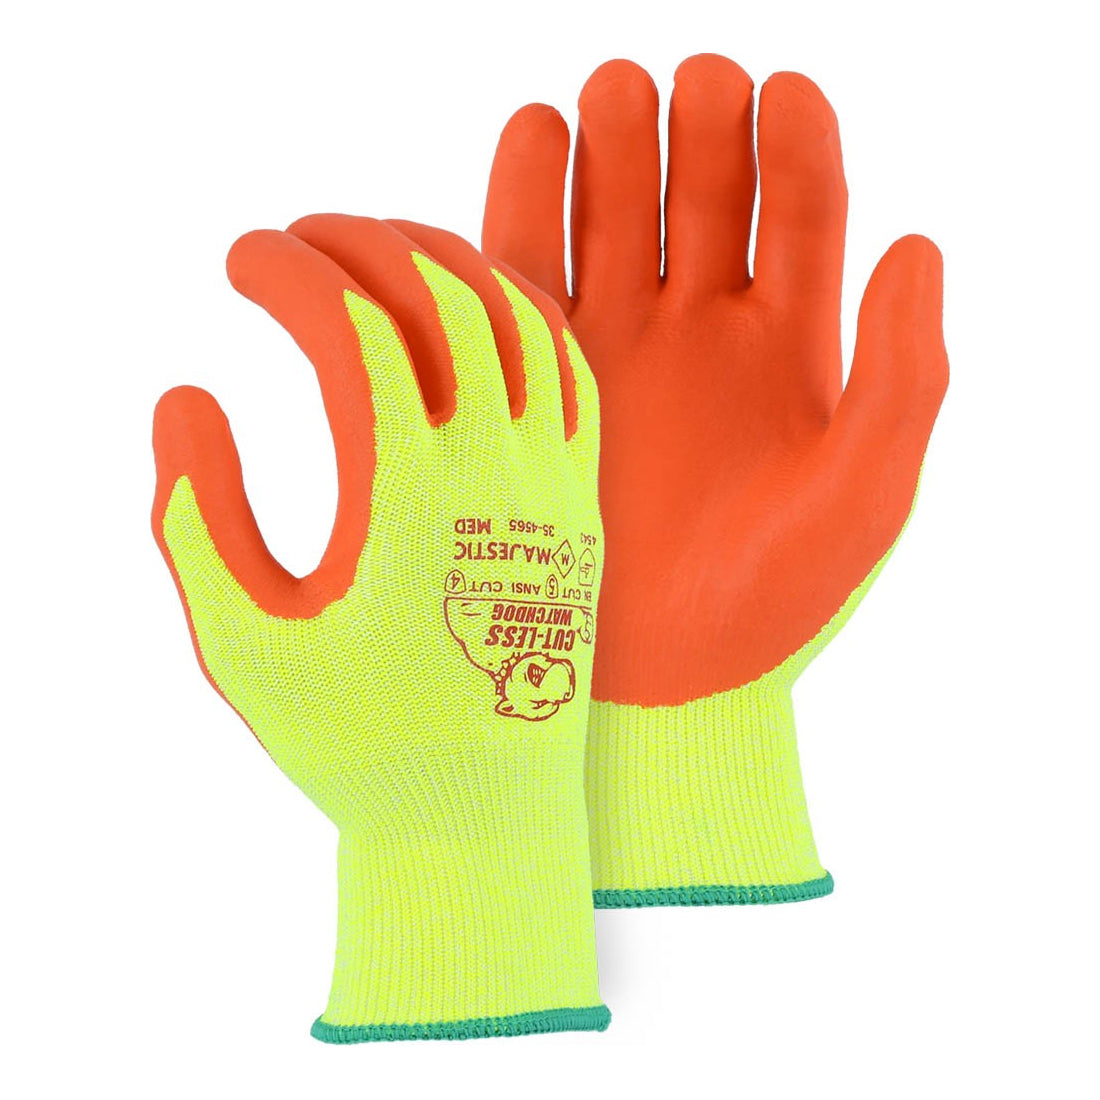 35-4565/X1 - Cut-Less WatchdogÂ® High-Vis Seamless Knit Glove with Foam Nitrile Palm